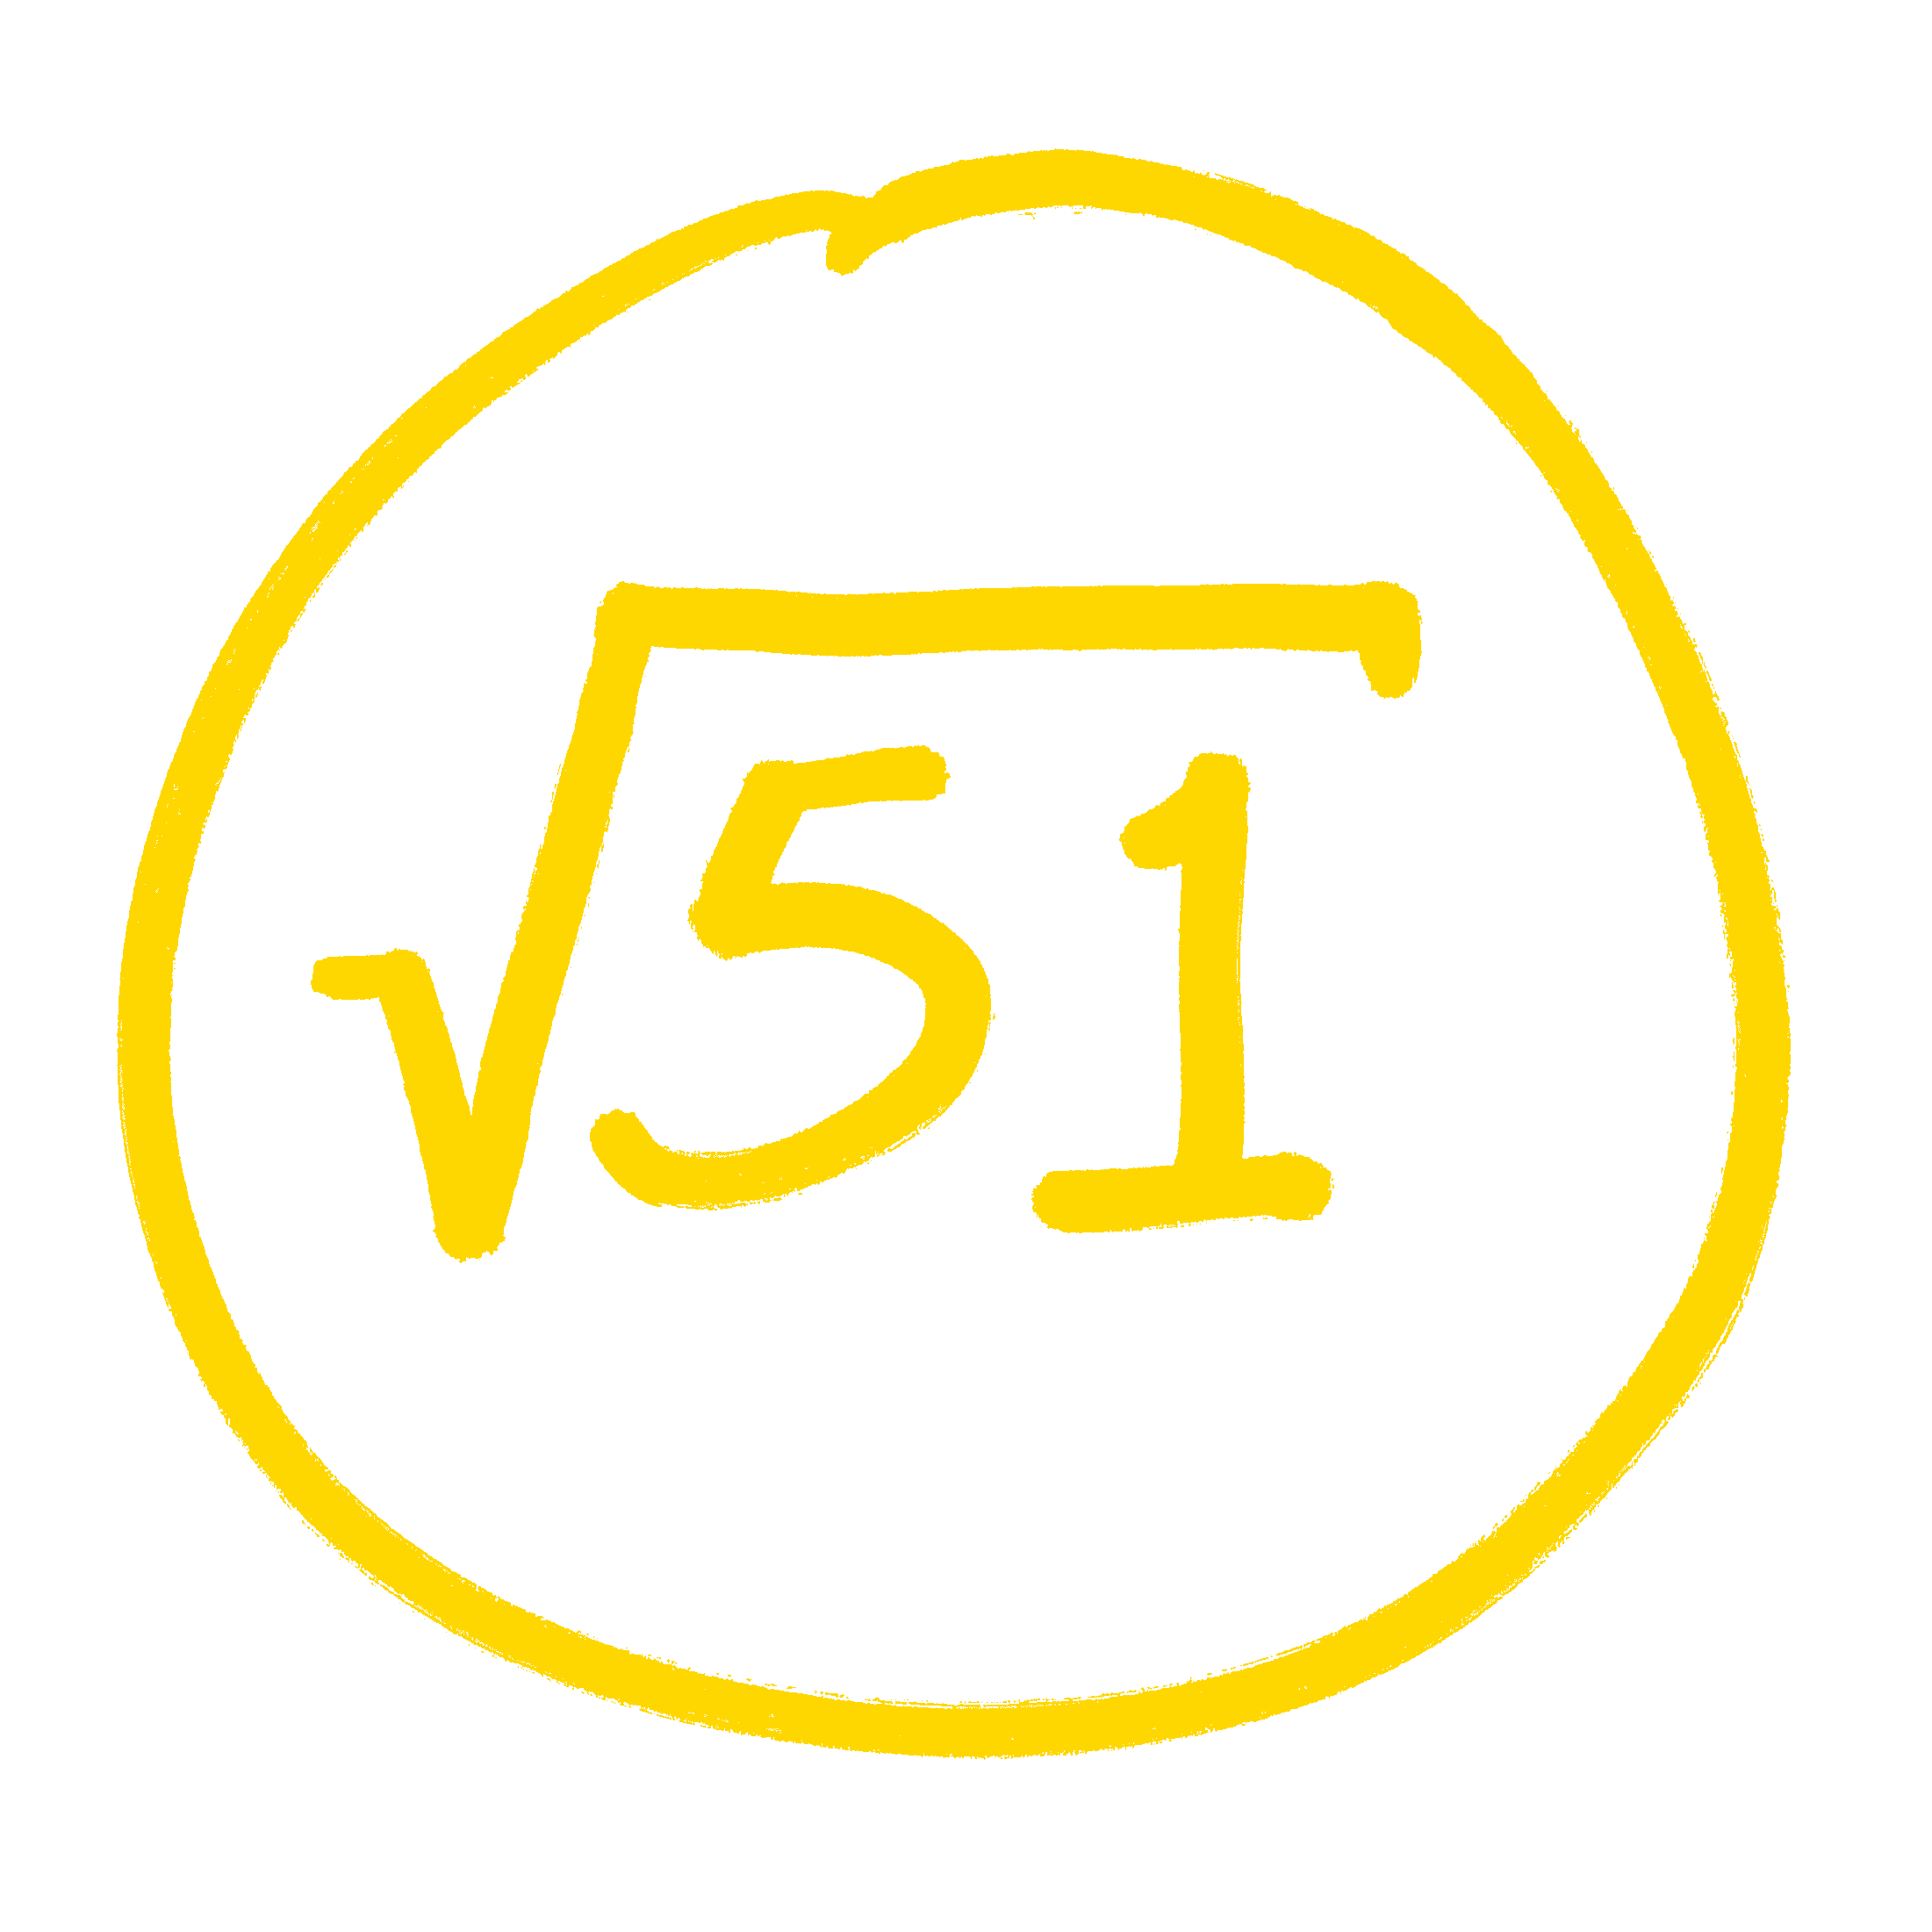 sqrt51_logo